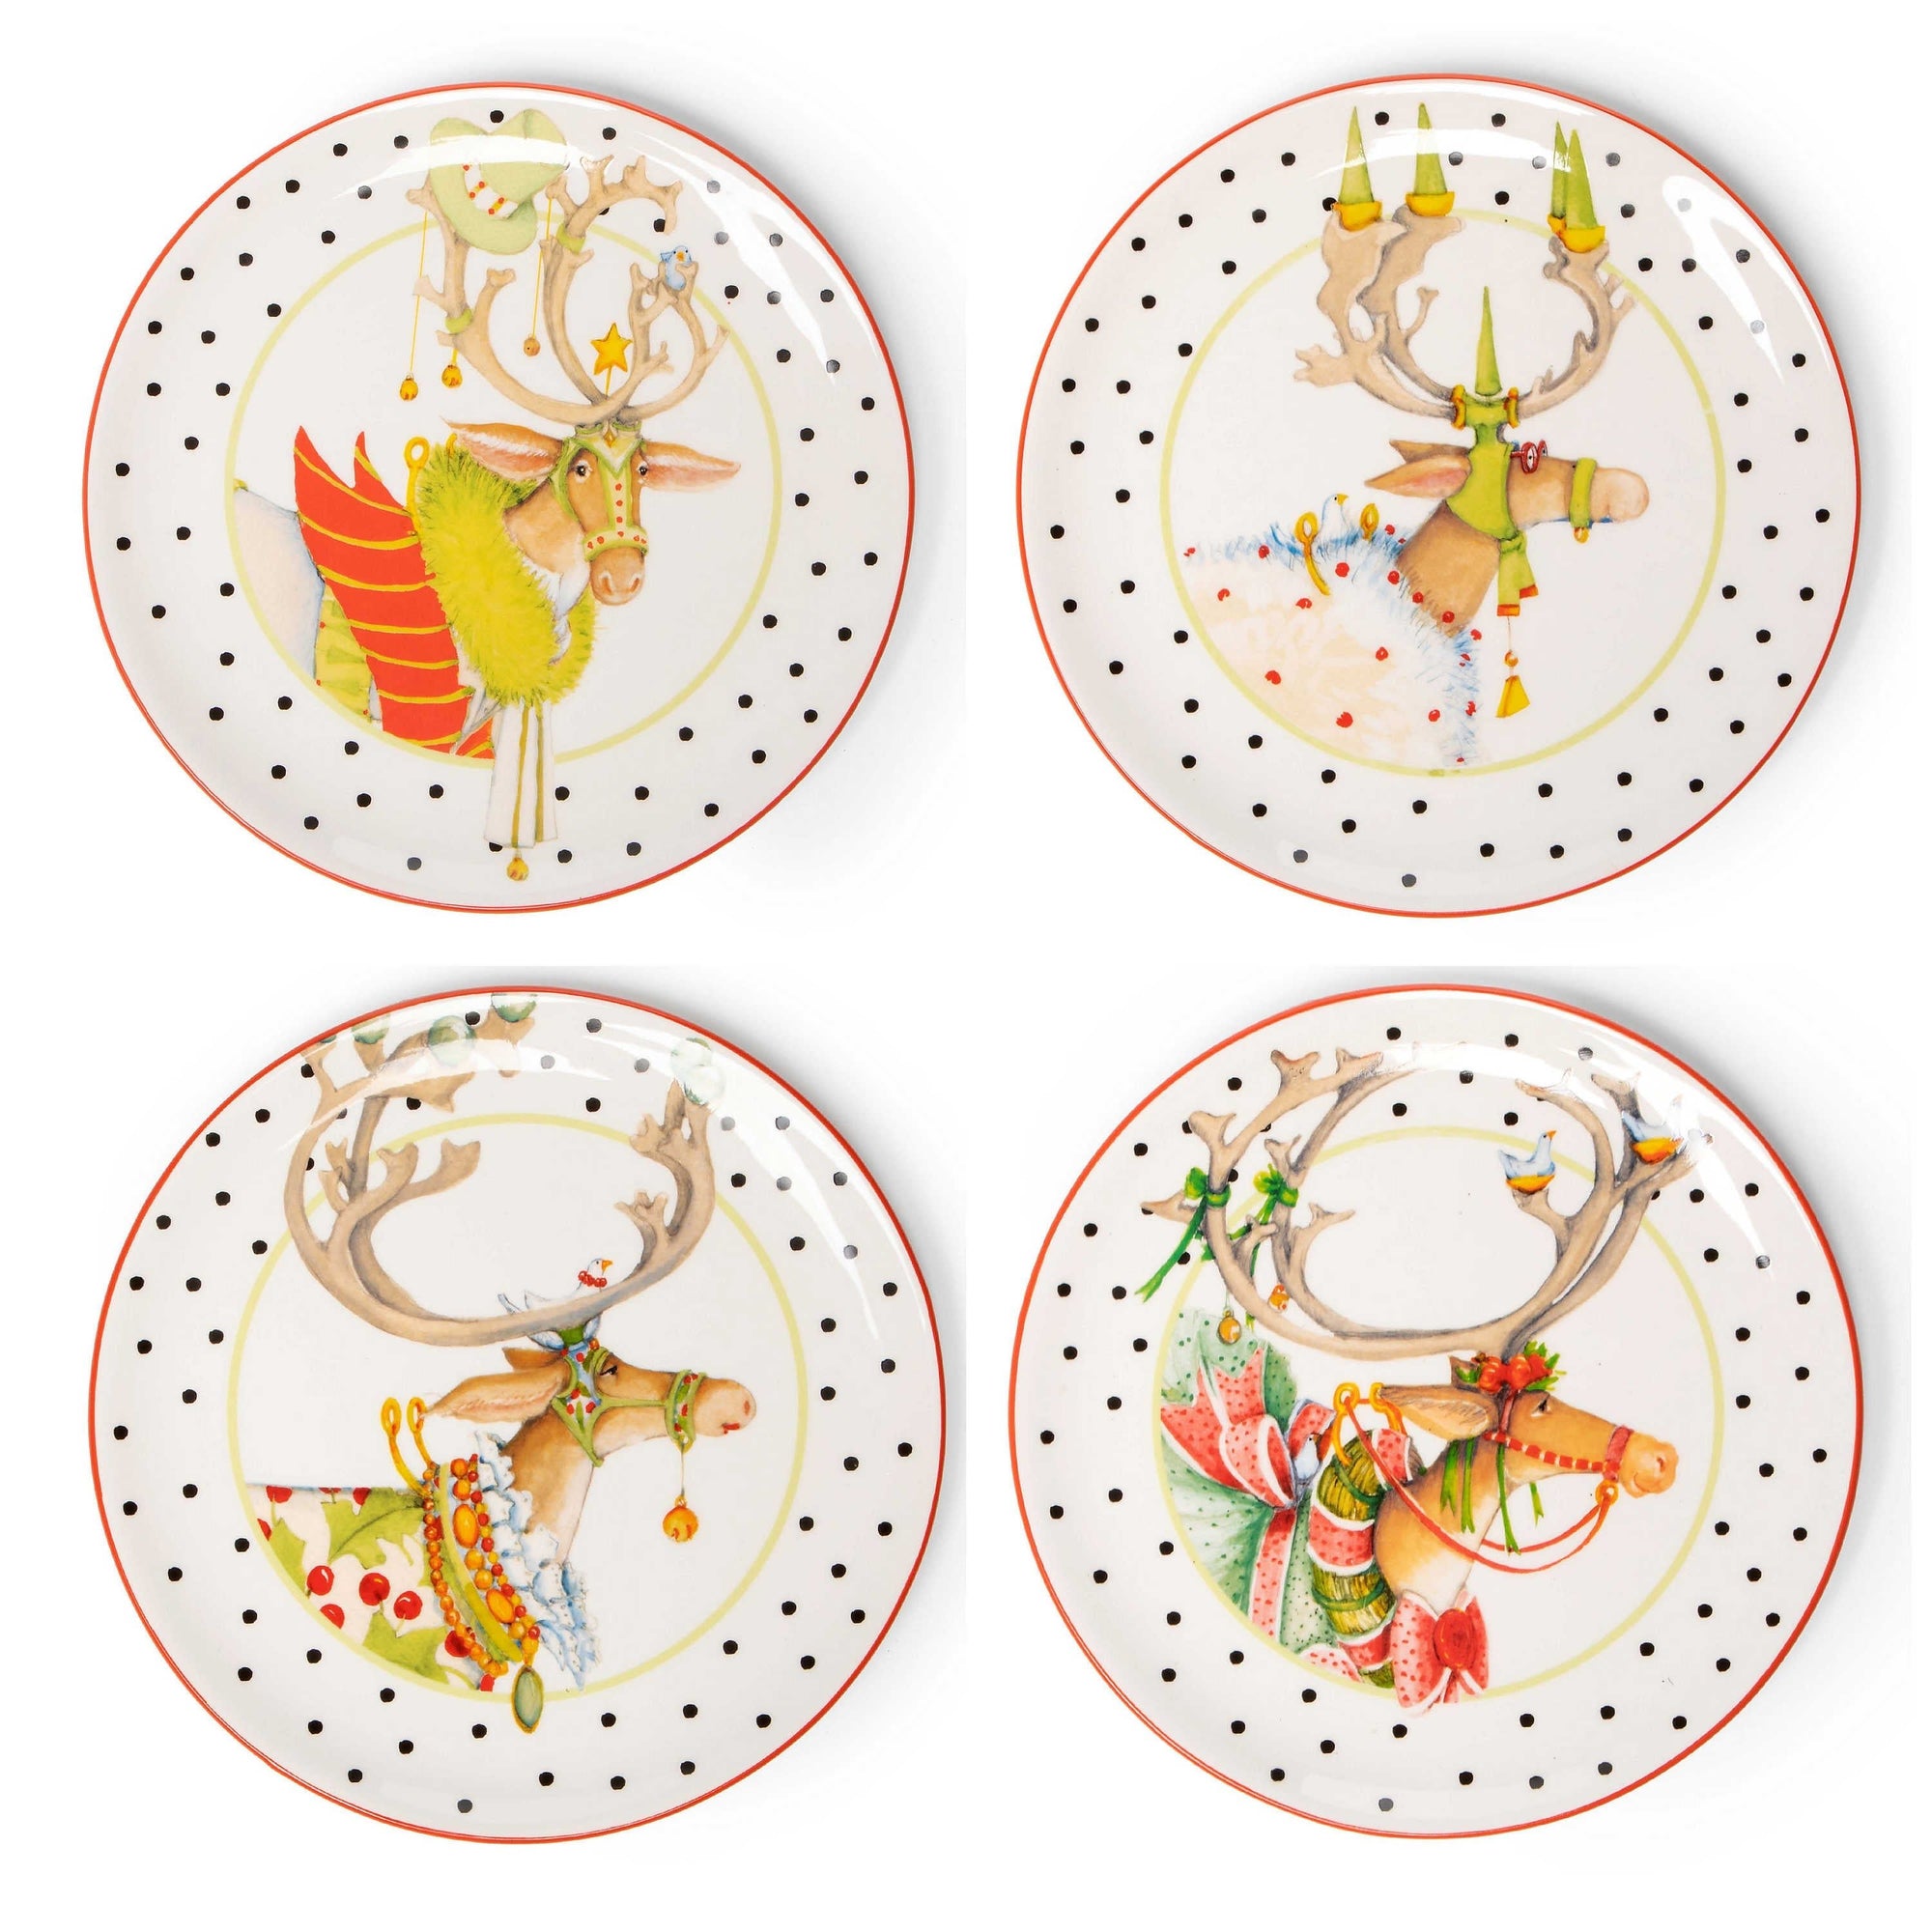 Dashaway Deer Plates, Set of 4 - My Christmas